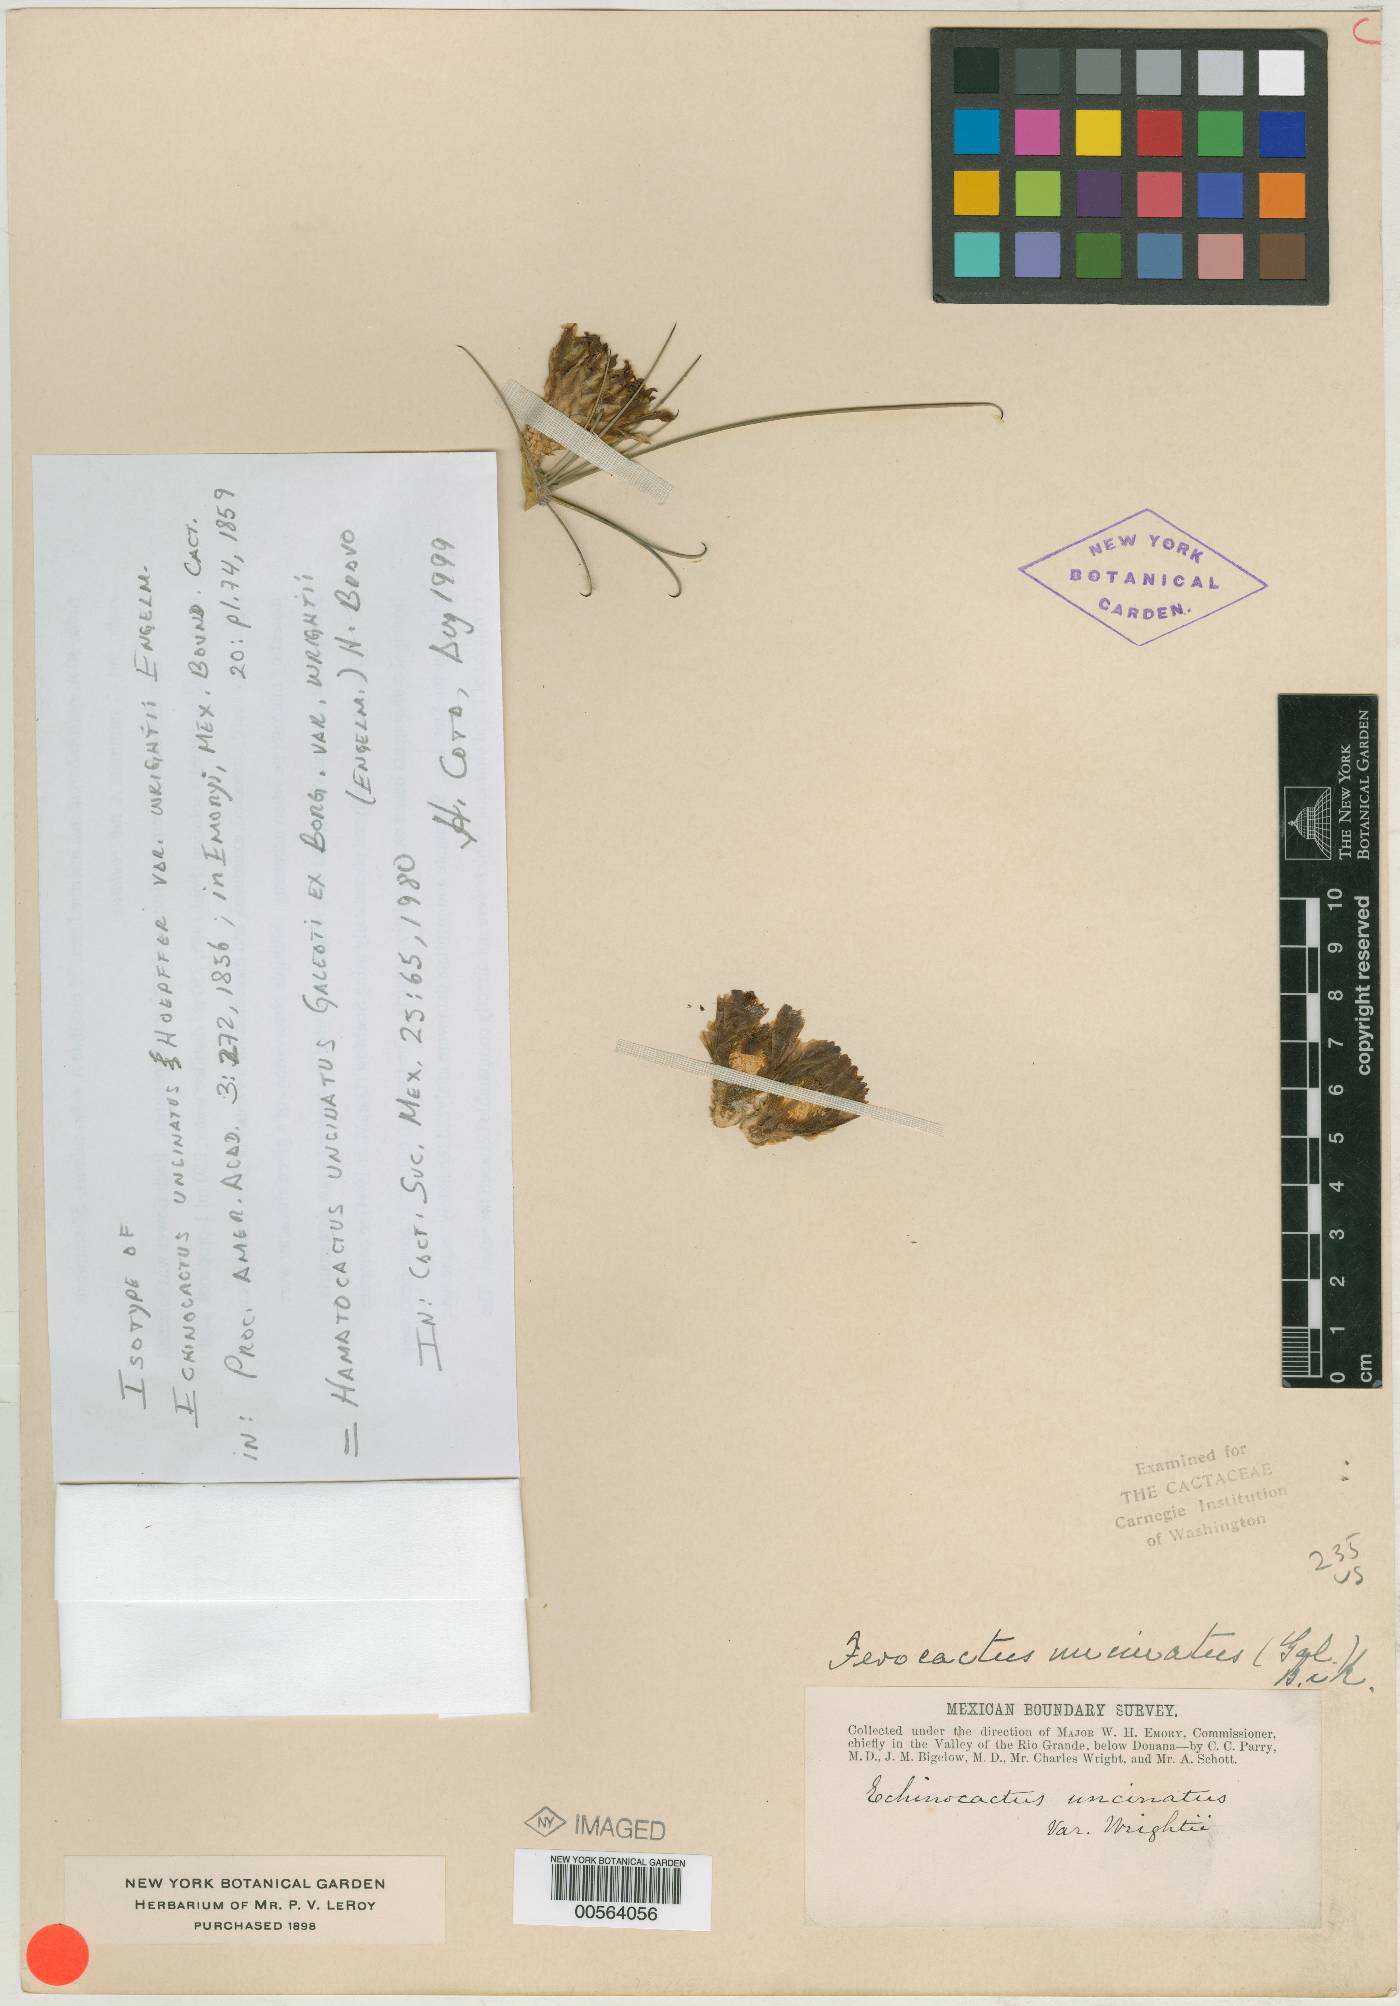 Sclerocactus uncinatus var. wrightii image